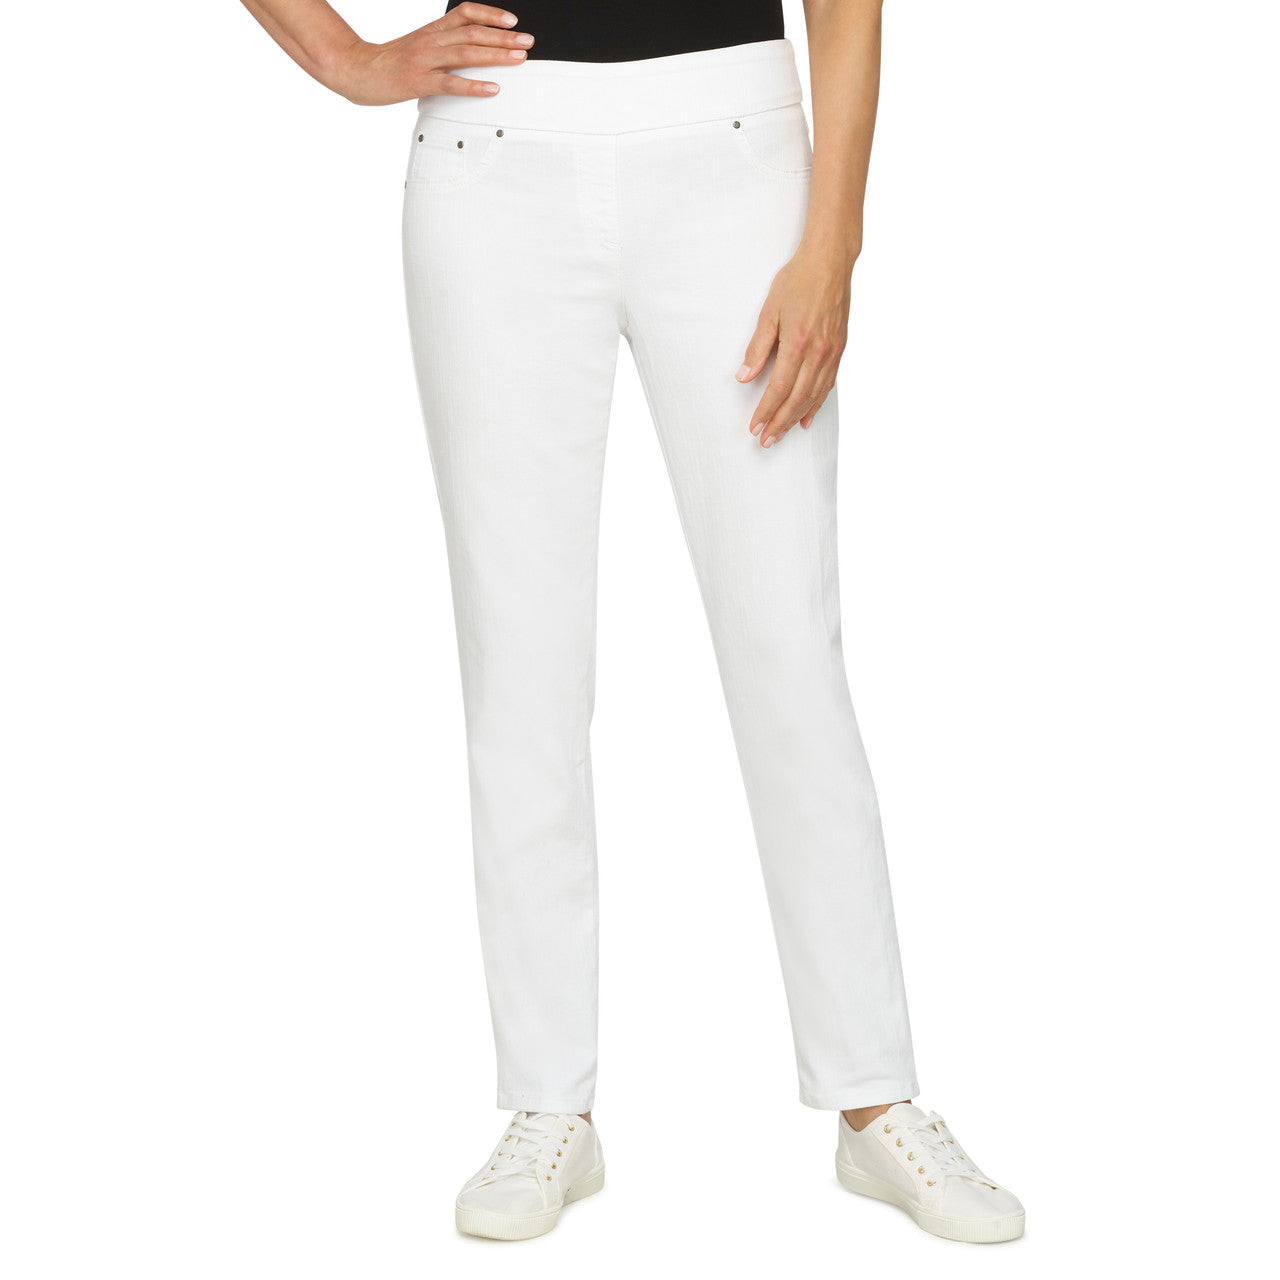 036- Ruby Road White Petite Stretch Faux Pocket Jeans